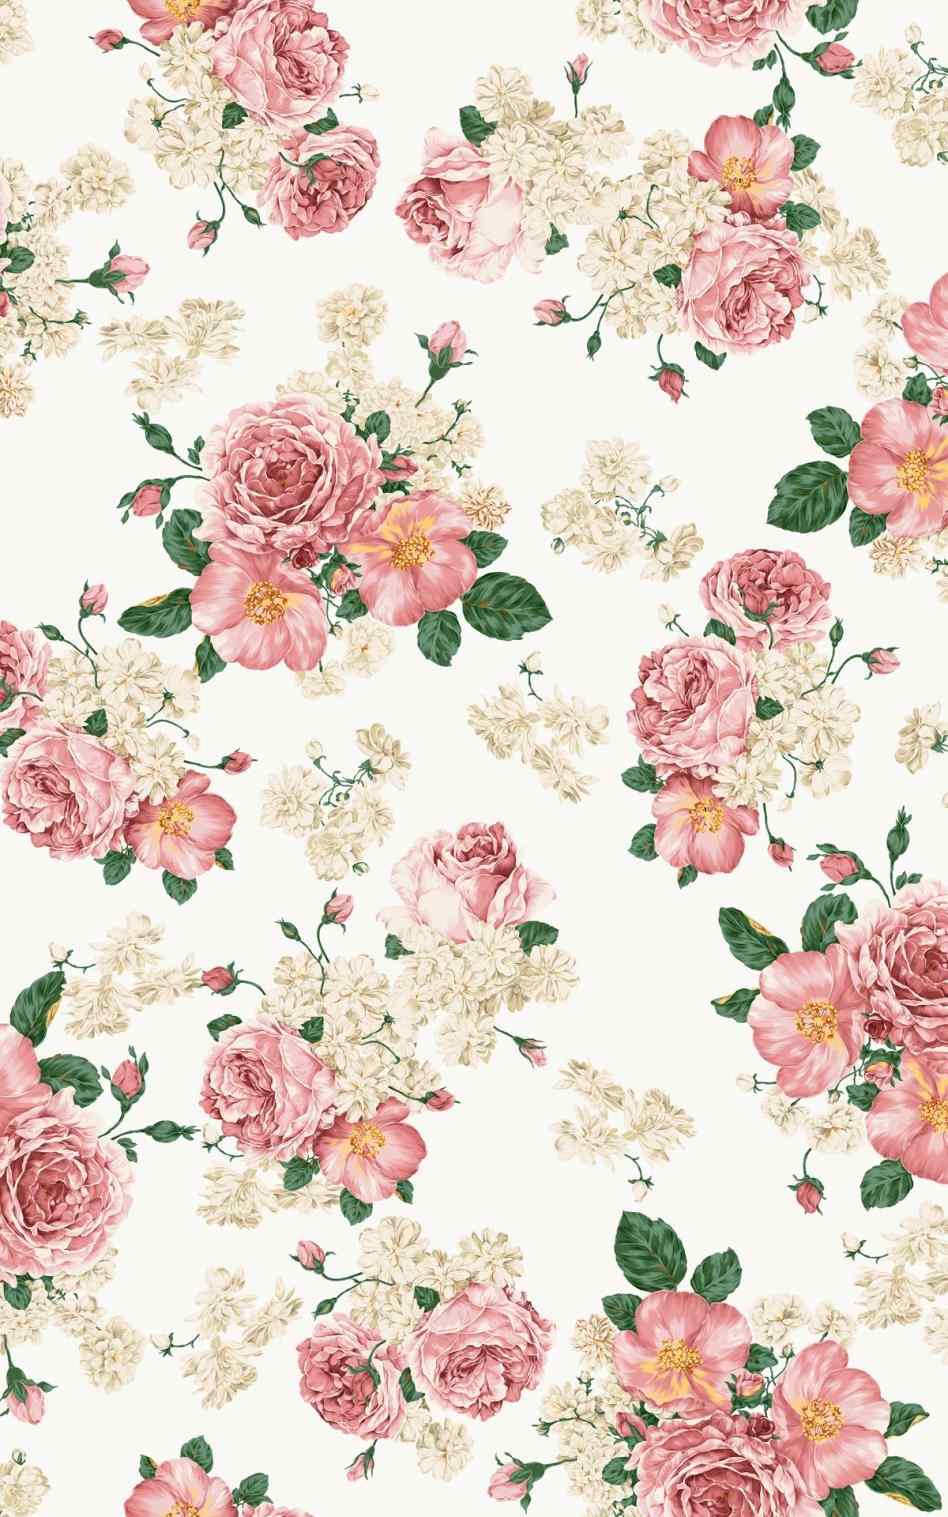 Vintage flower background tumblr collection for floral pattern